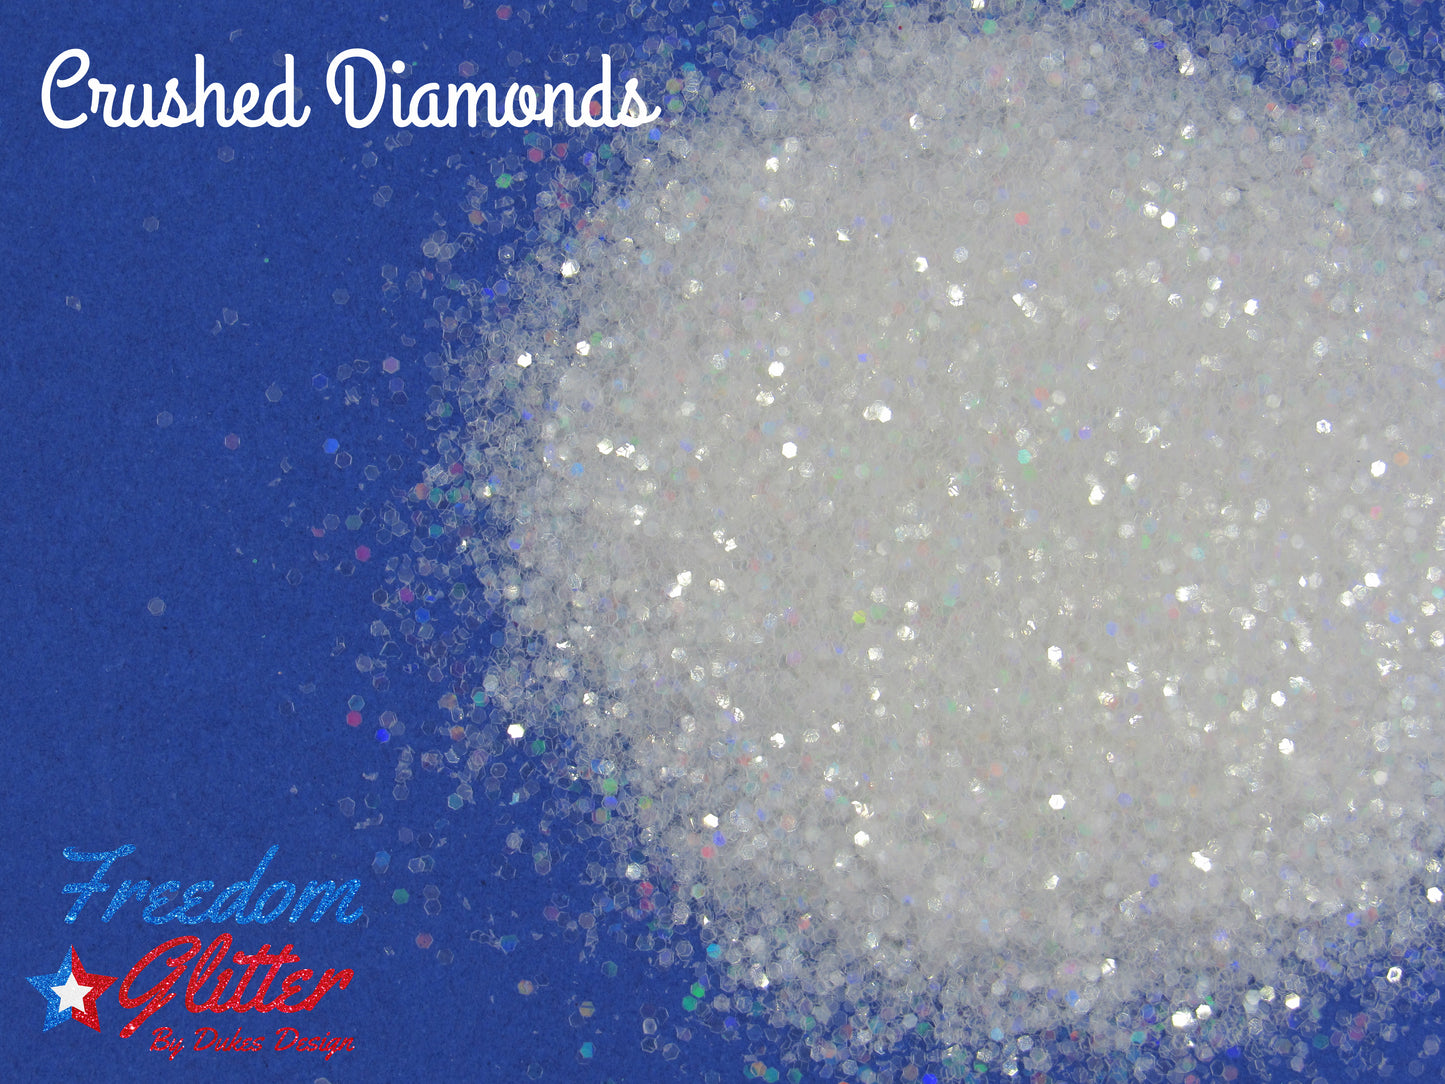 Crushed Diamonds (Iridescent Glitter)